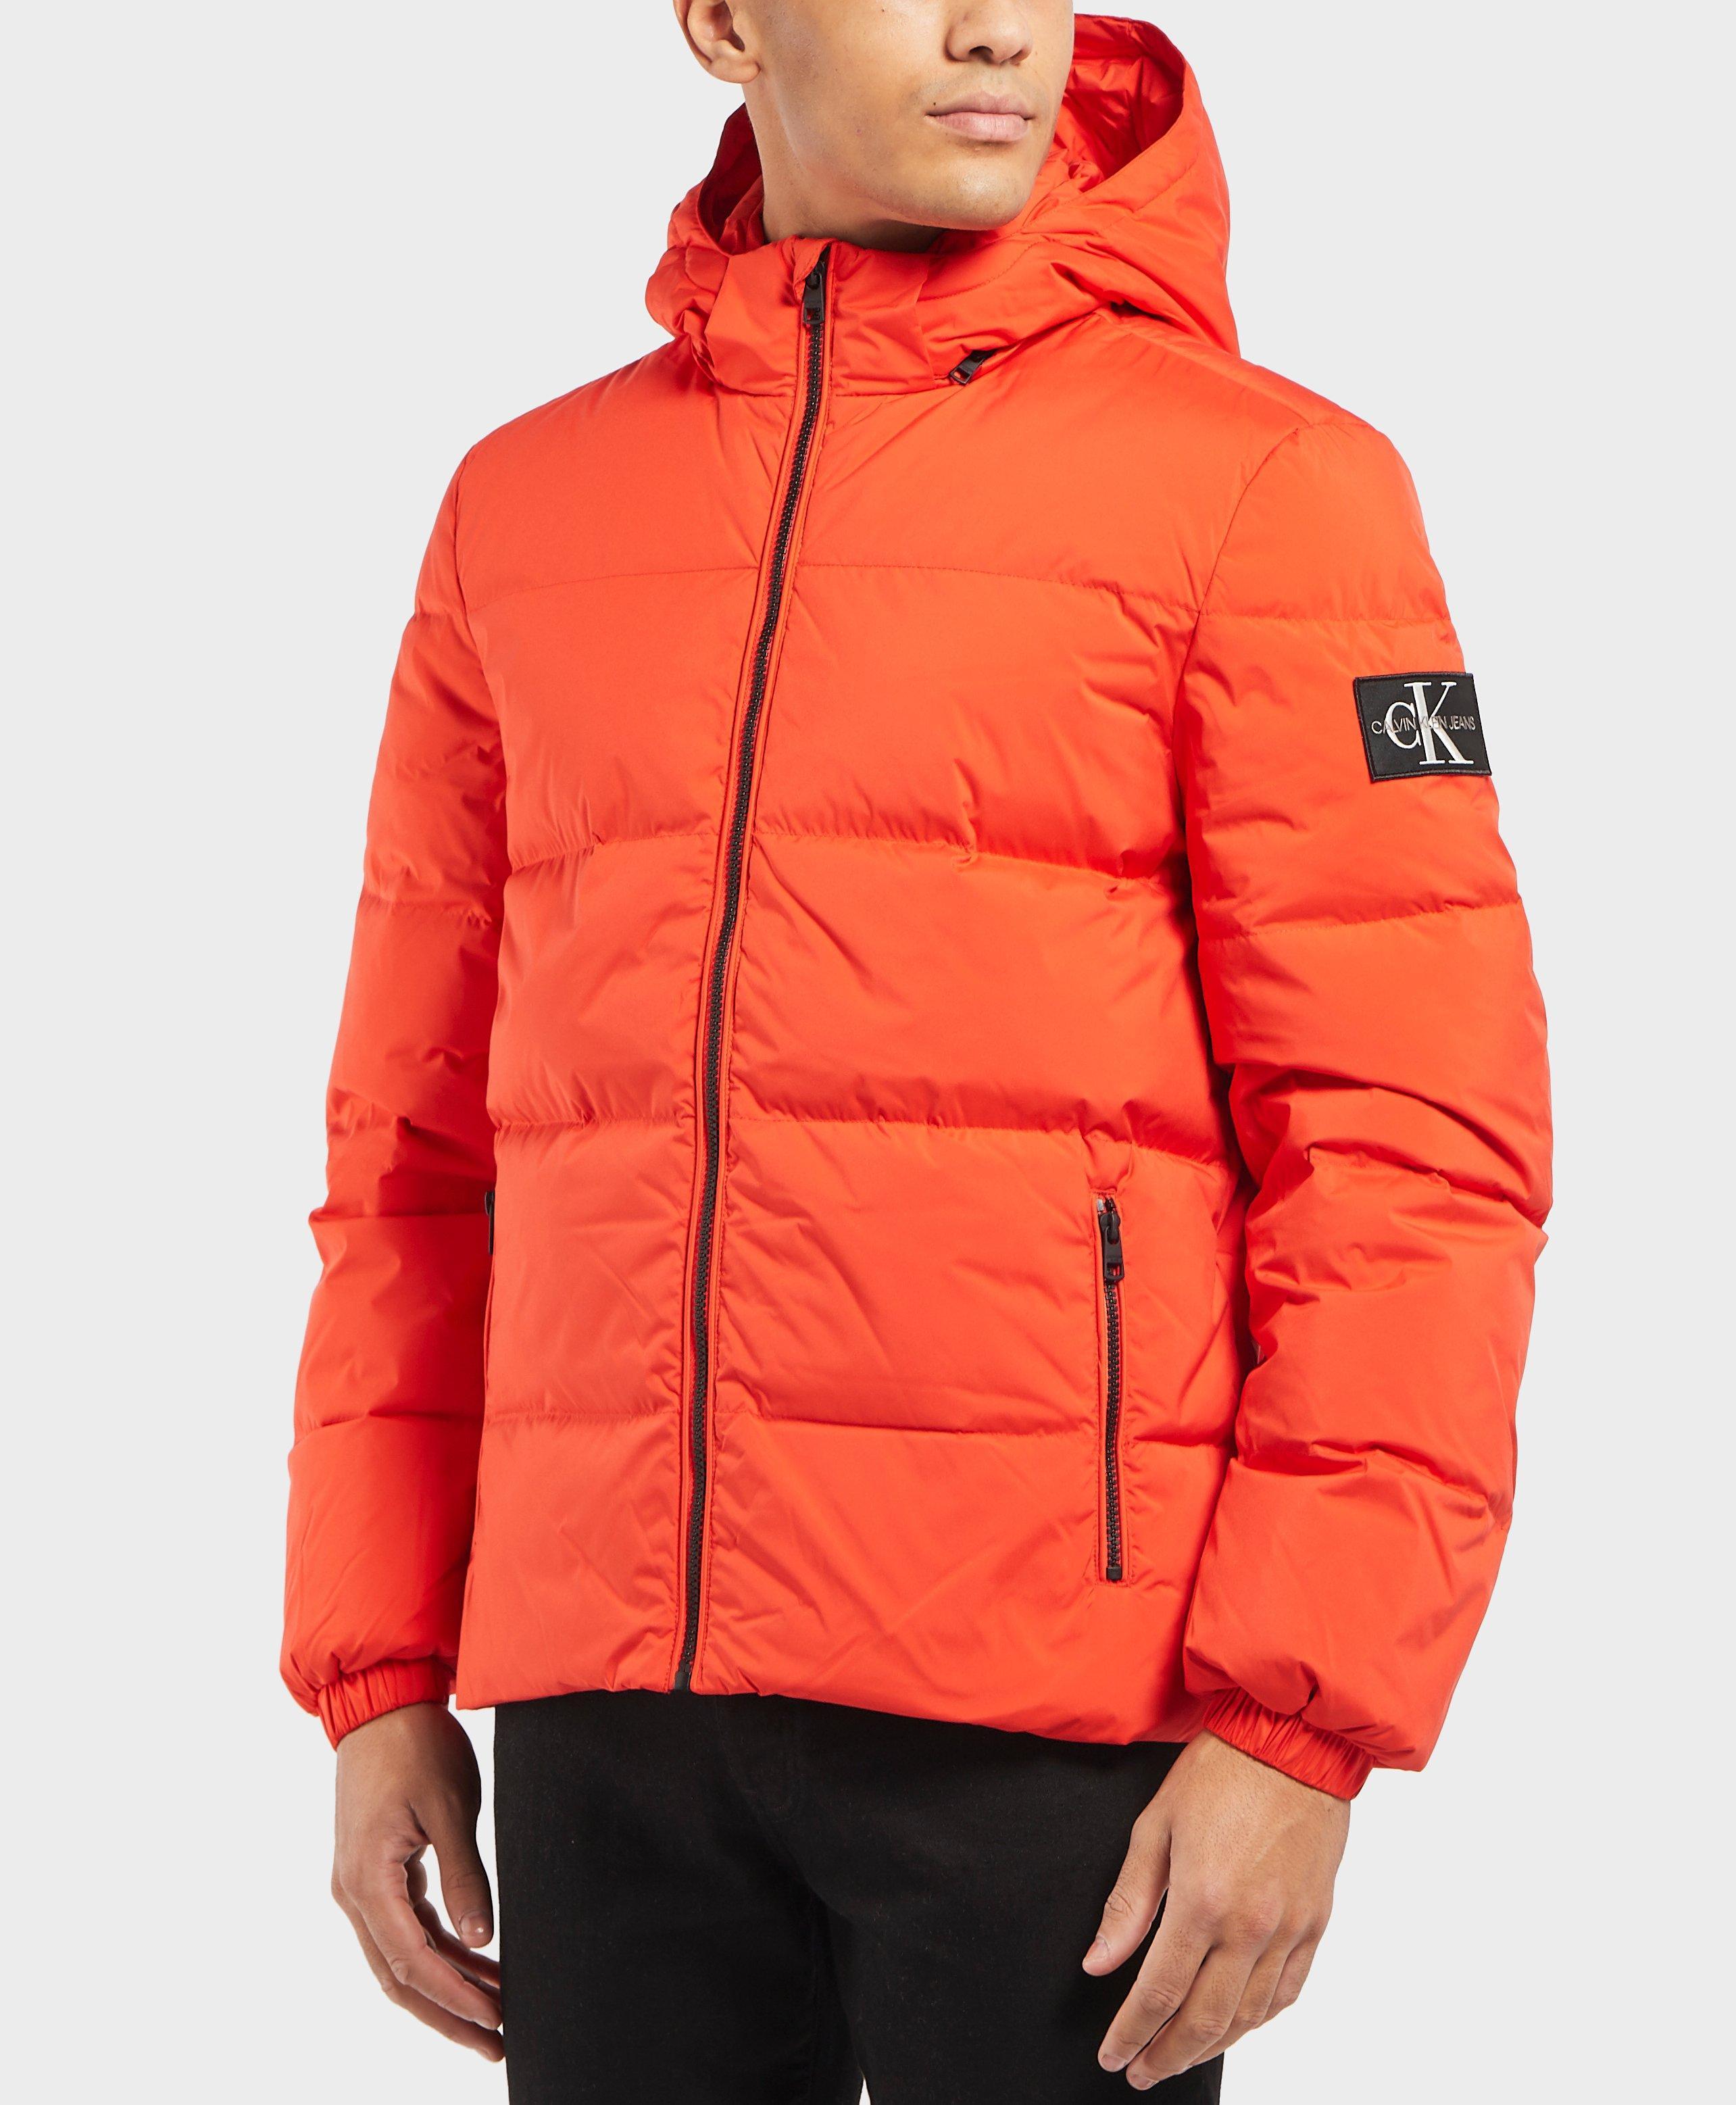 Calvin Klein Synthetic Arm Logo Down Padded Jacket in Orange for Men - Lyst